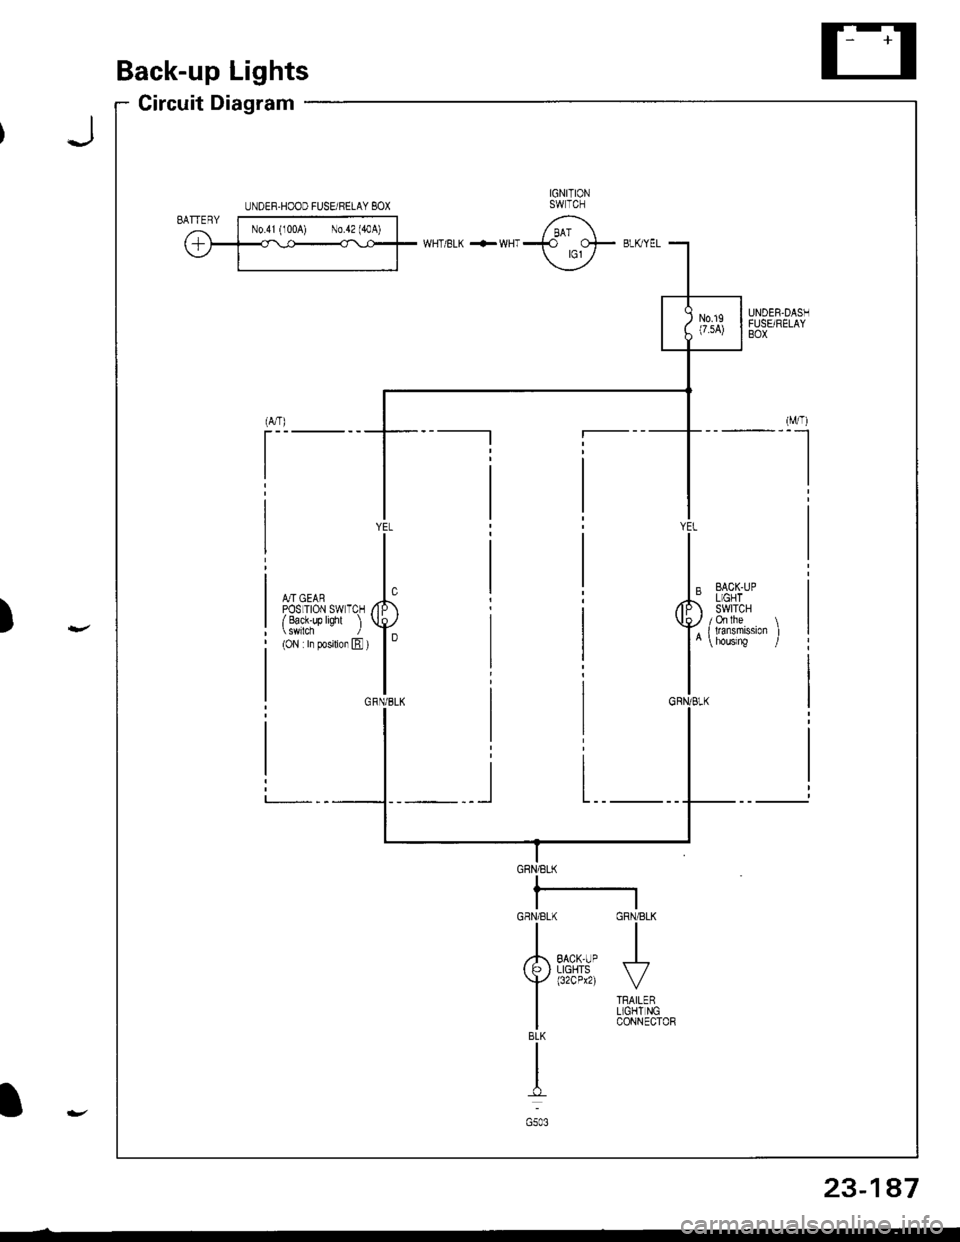 HONDA INTEGRA 1998 4.G Workshop Manual Back-up Lights
Circuit Diagram
IGNITIONswlTcHUNOER.HOOD FUSEi RELAY BOX
EACK.UPLIGHTswtTcH/ / on lhe \r I ransnBgon I
GRN/BLK
IIJ
TRAILERL]GHT NGCONNECTOR
GRN/BLK
IzA arcx.upI P  LIGHTS
f 
r:zce21
I